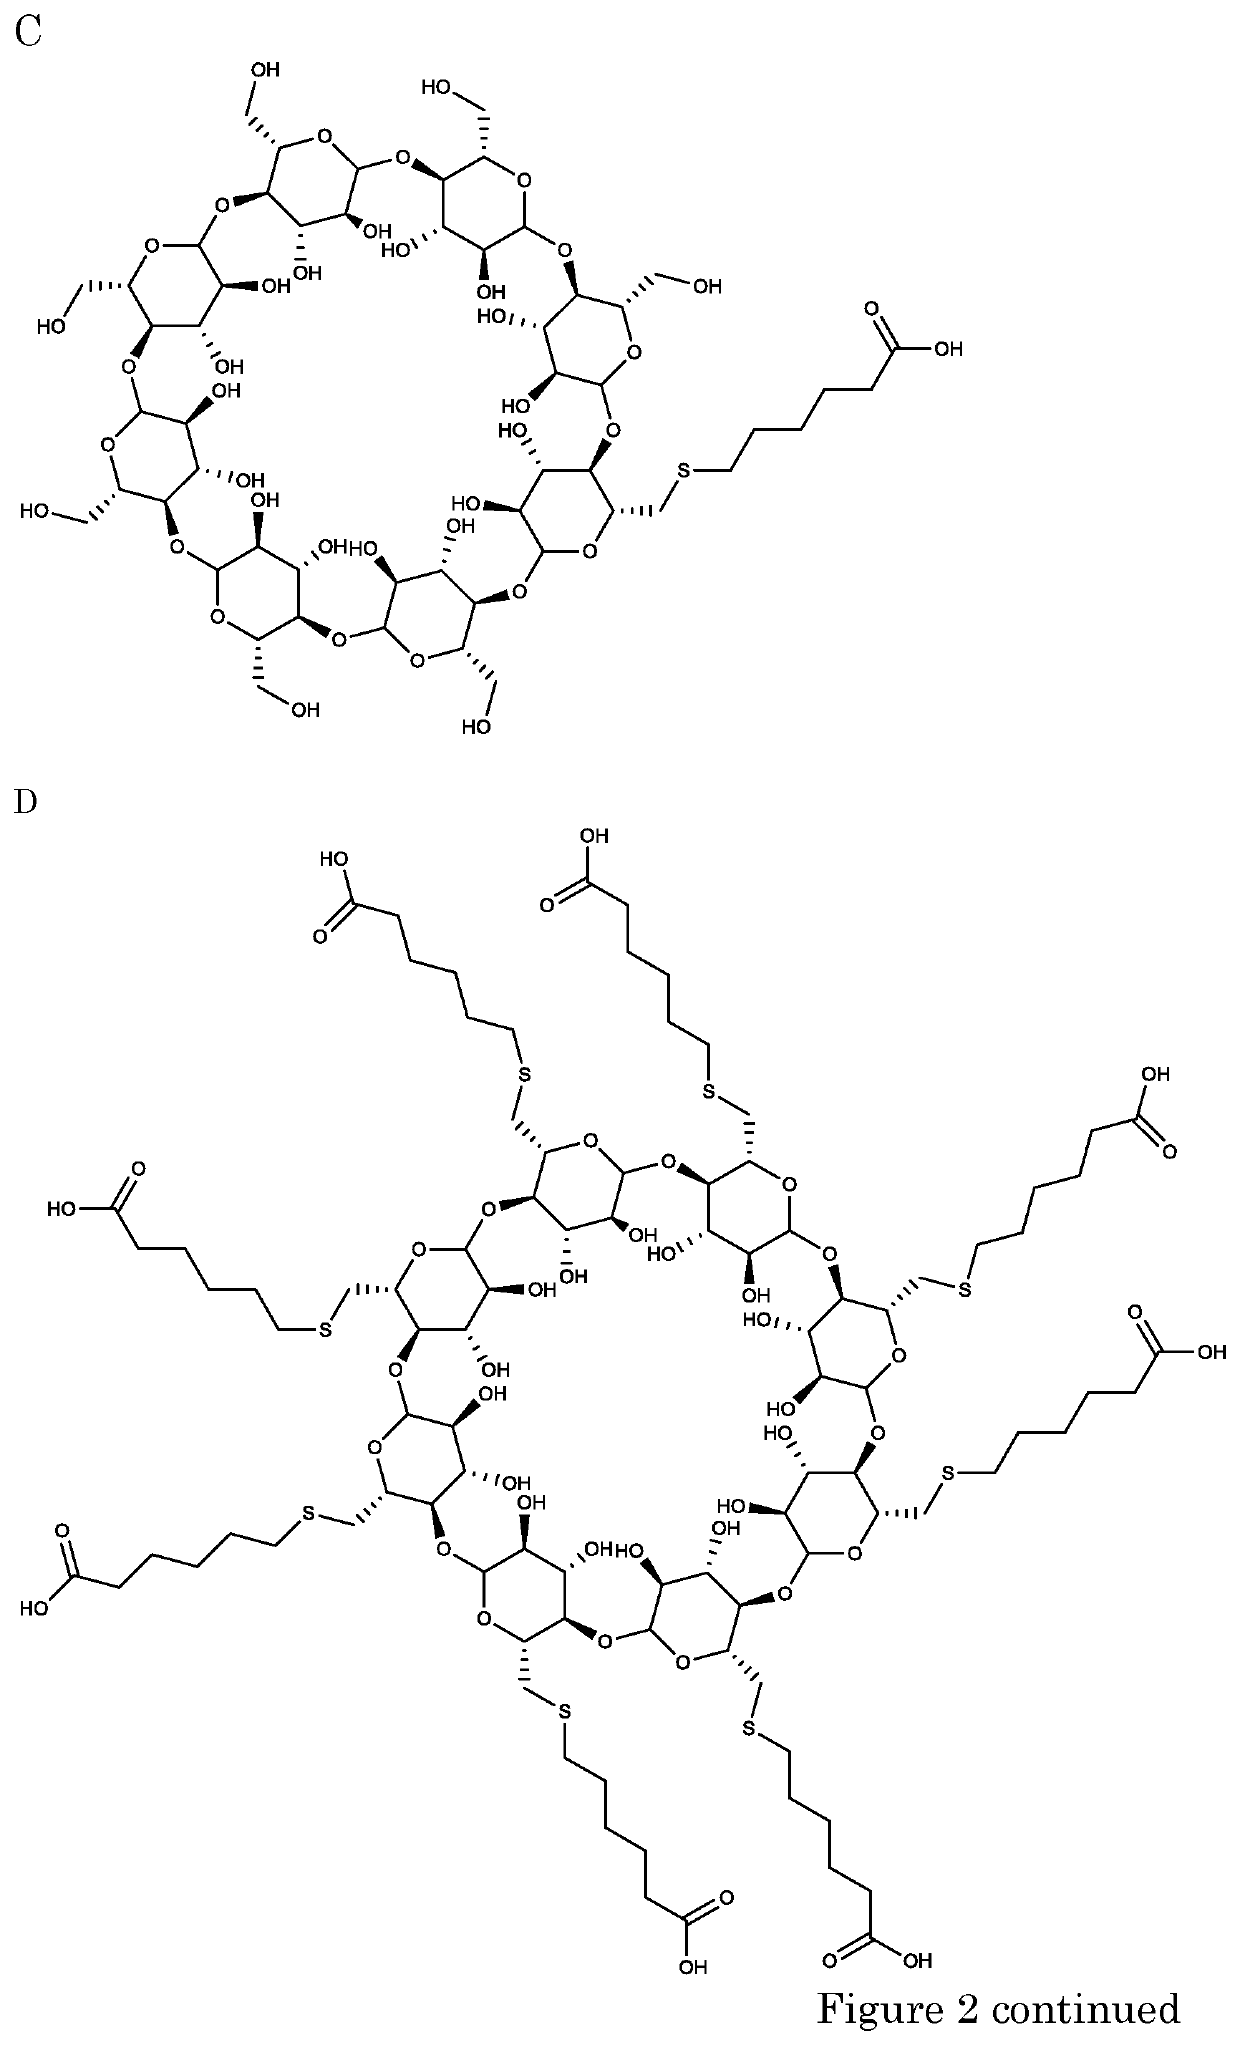 Cyclodextrins as procoagulants